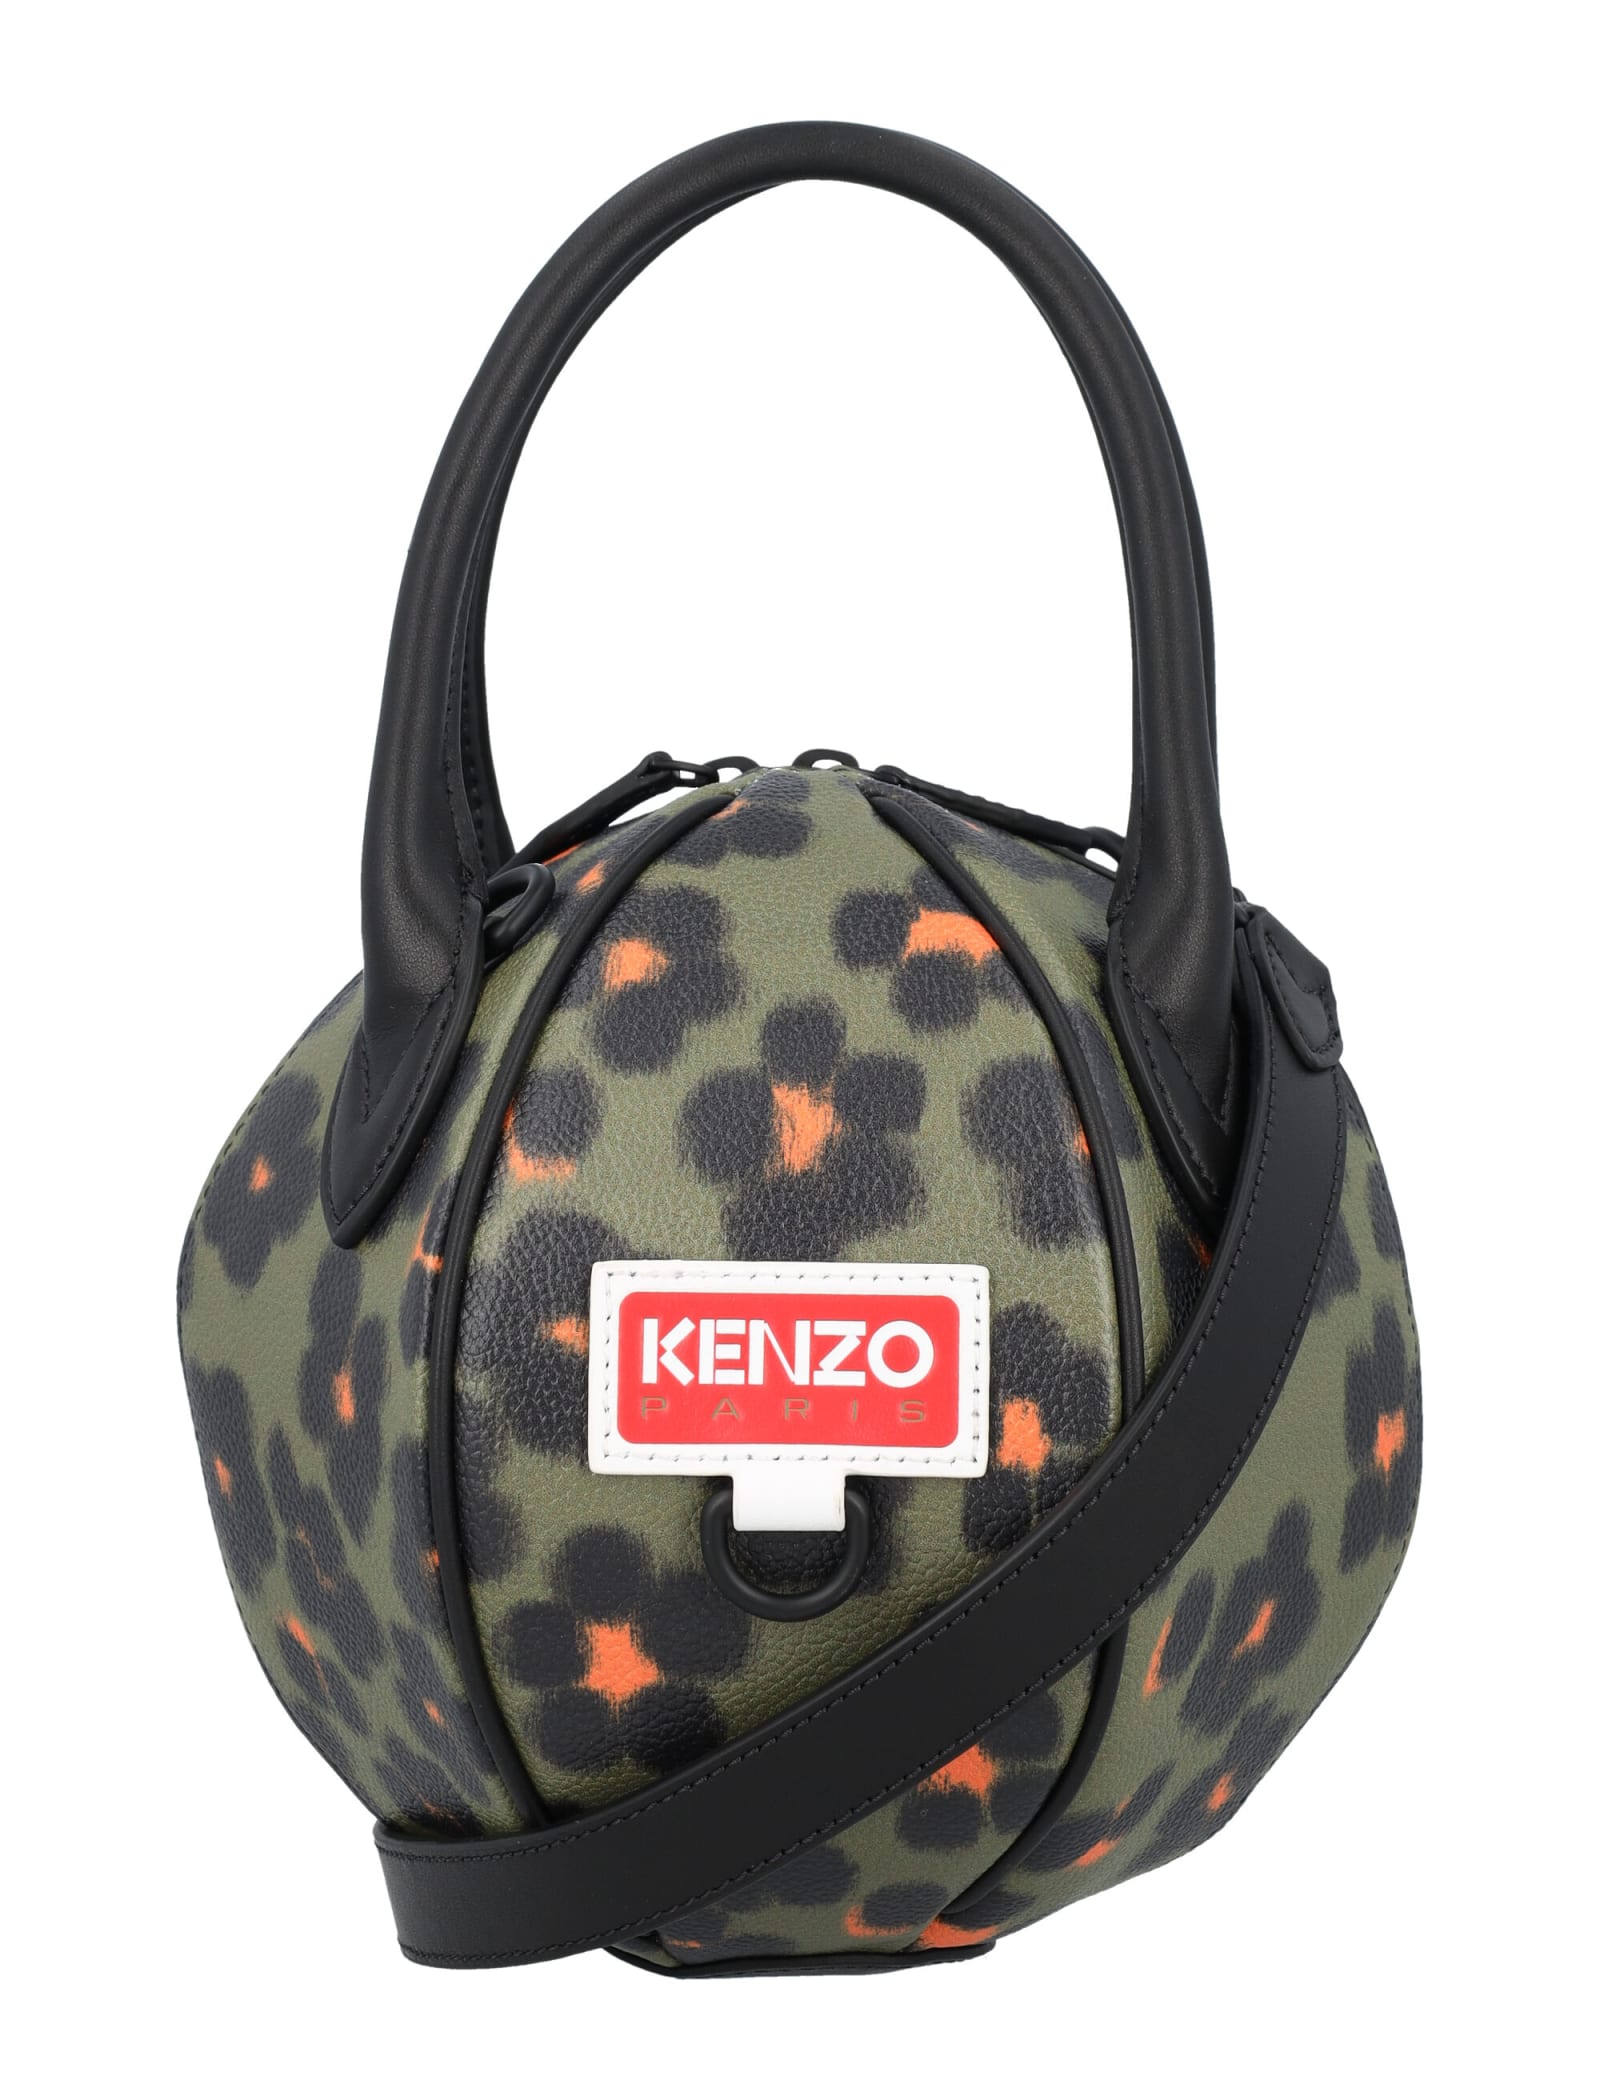 Kenzo Discover hana Leopard Handbag